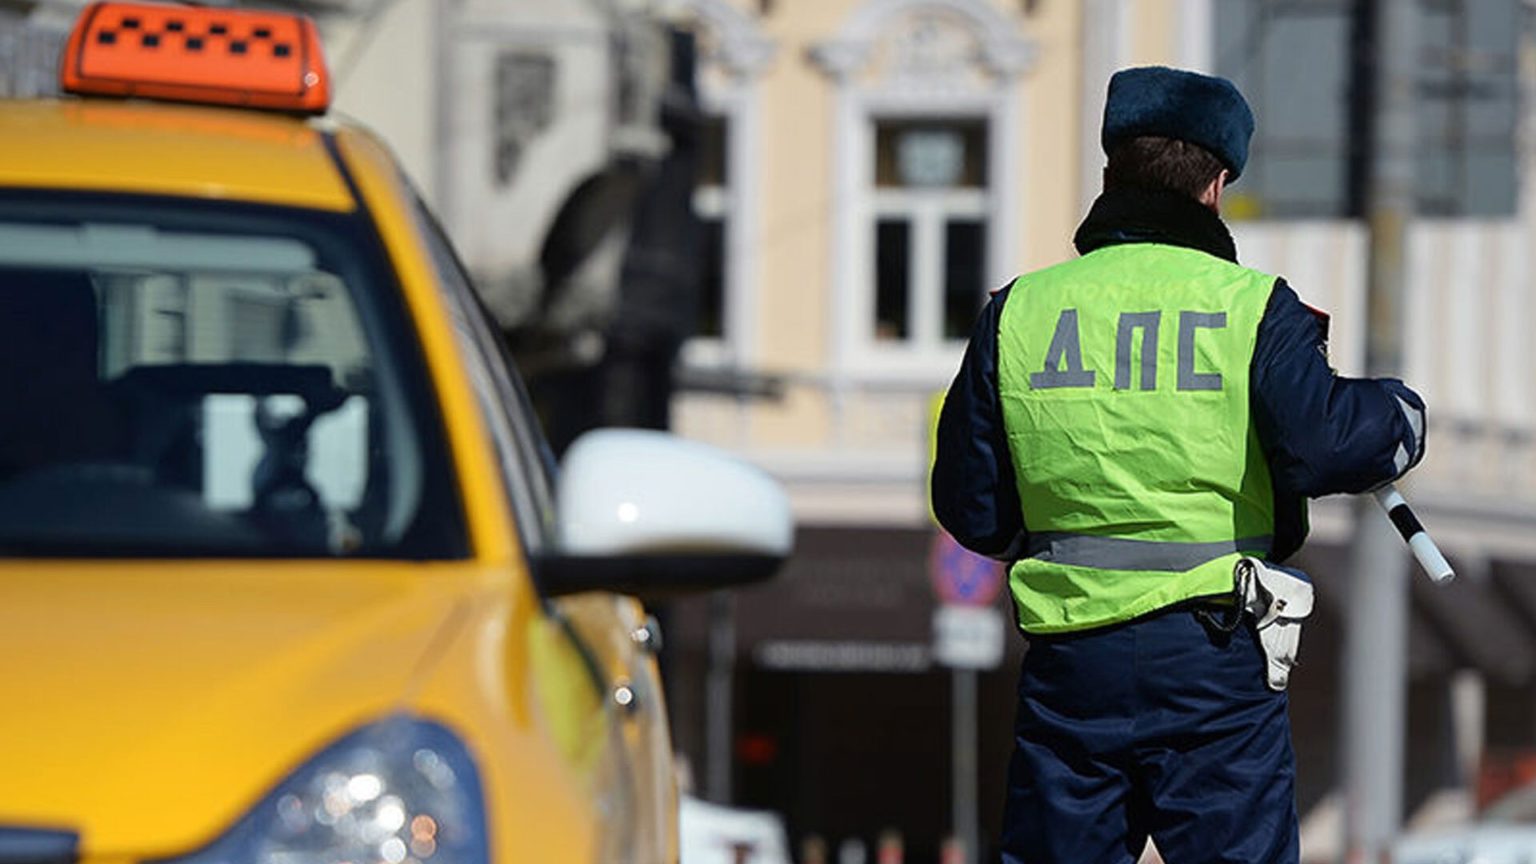 ФСБ будет следить за пассажирами такси: Госдума одобрила новый закон